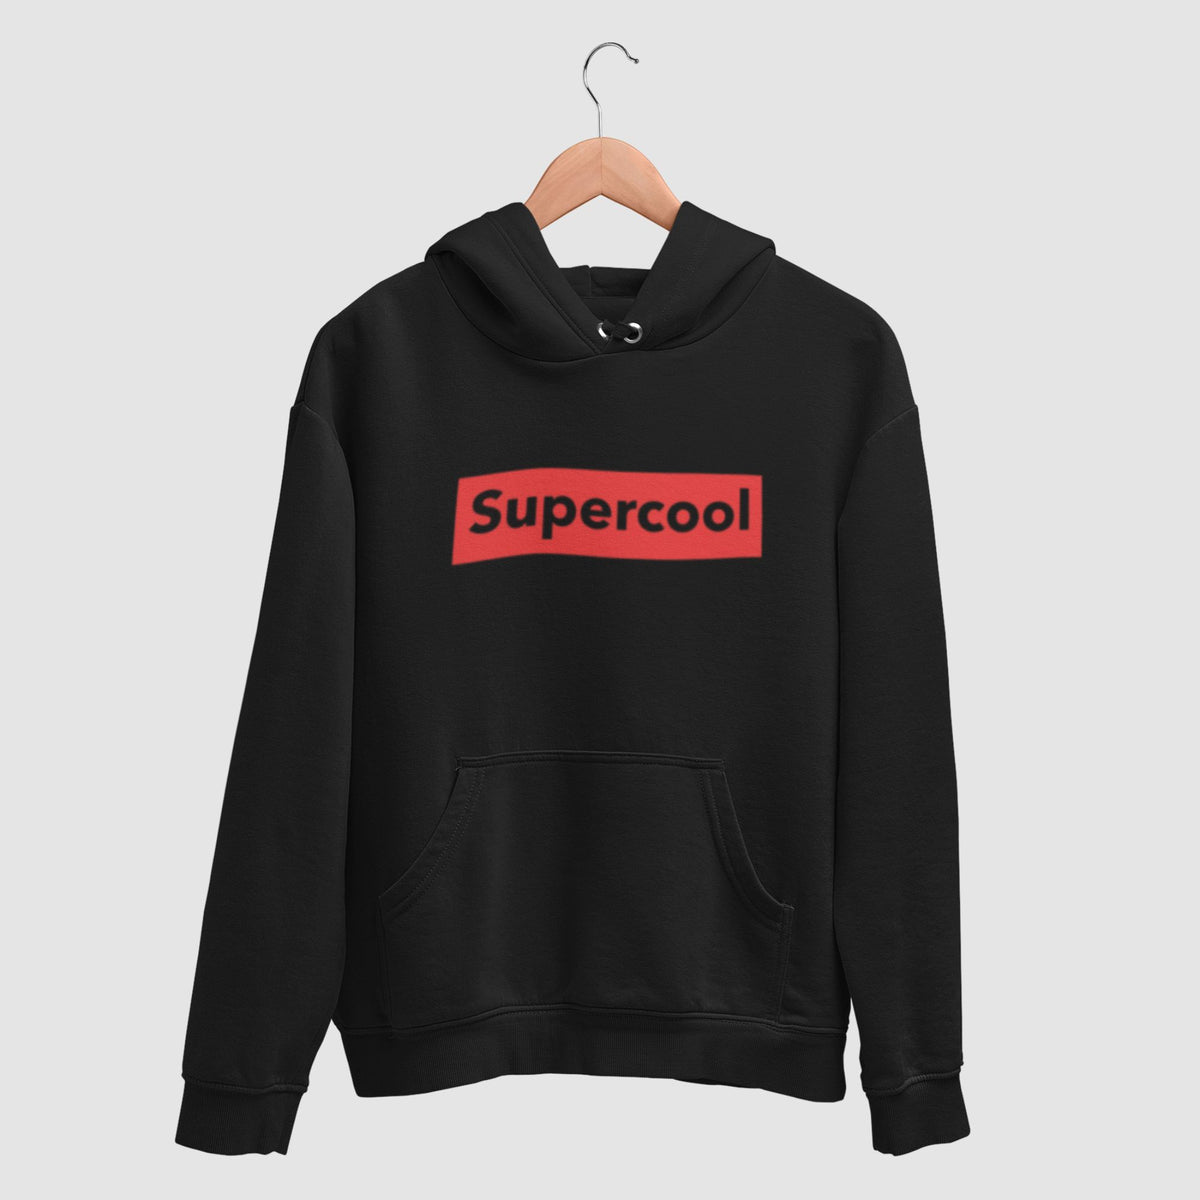 supercool-cotton-printed-unisex-black-hoodie-for-men-for-women-gogirgit-com